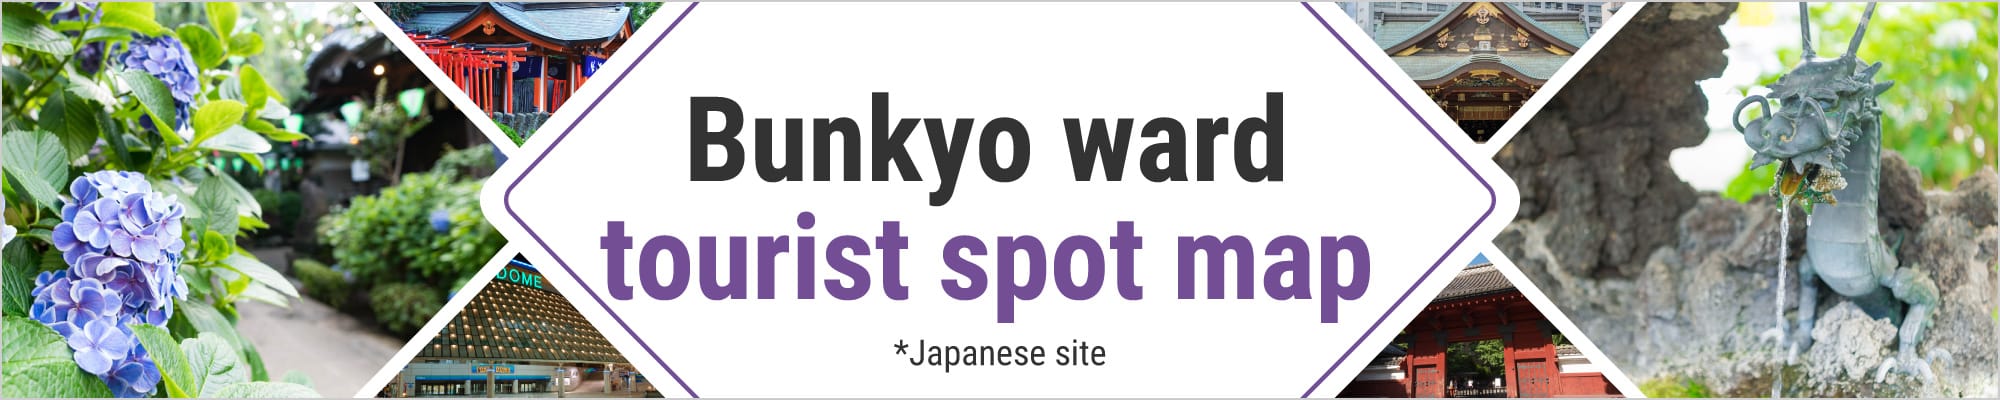 Bunkyo ward tourist spot map 